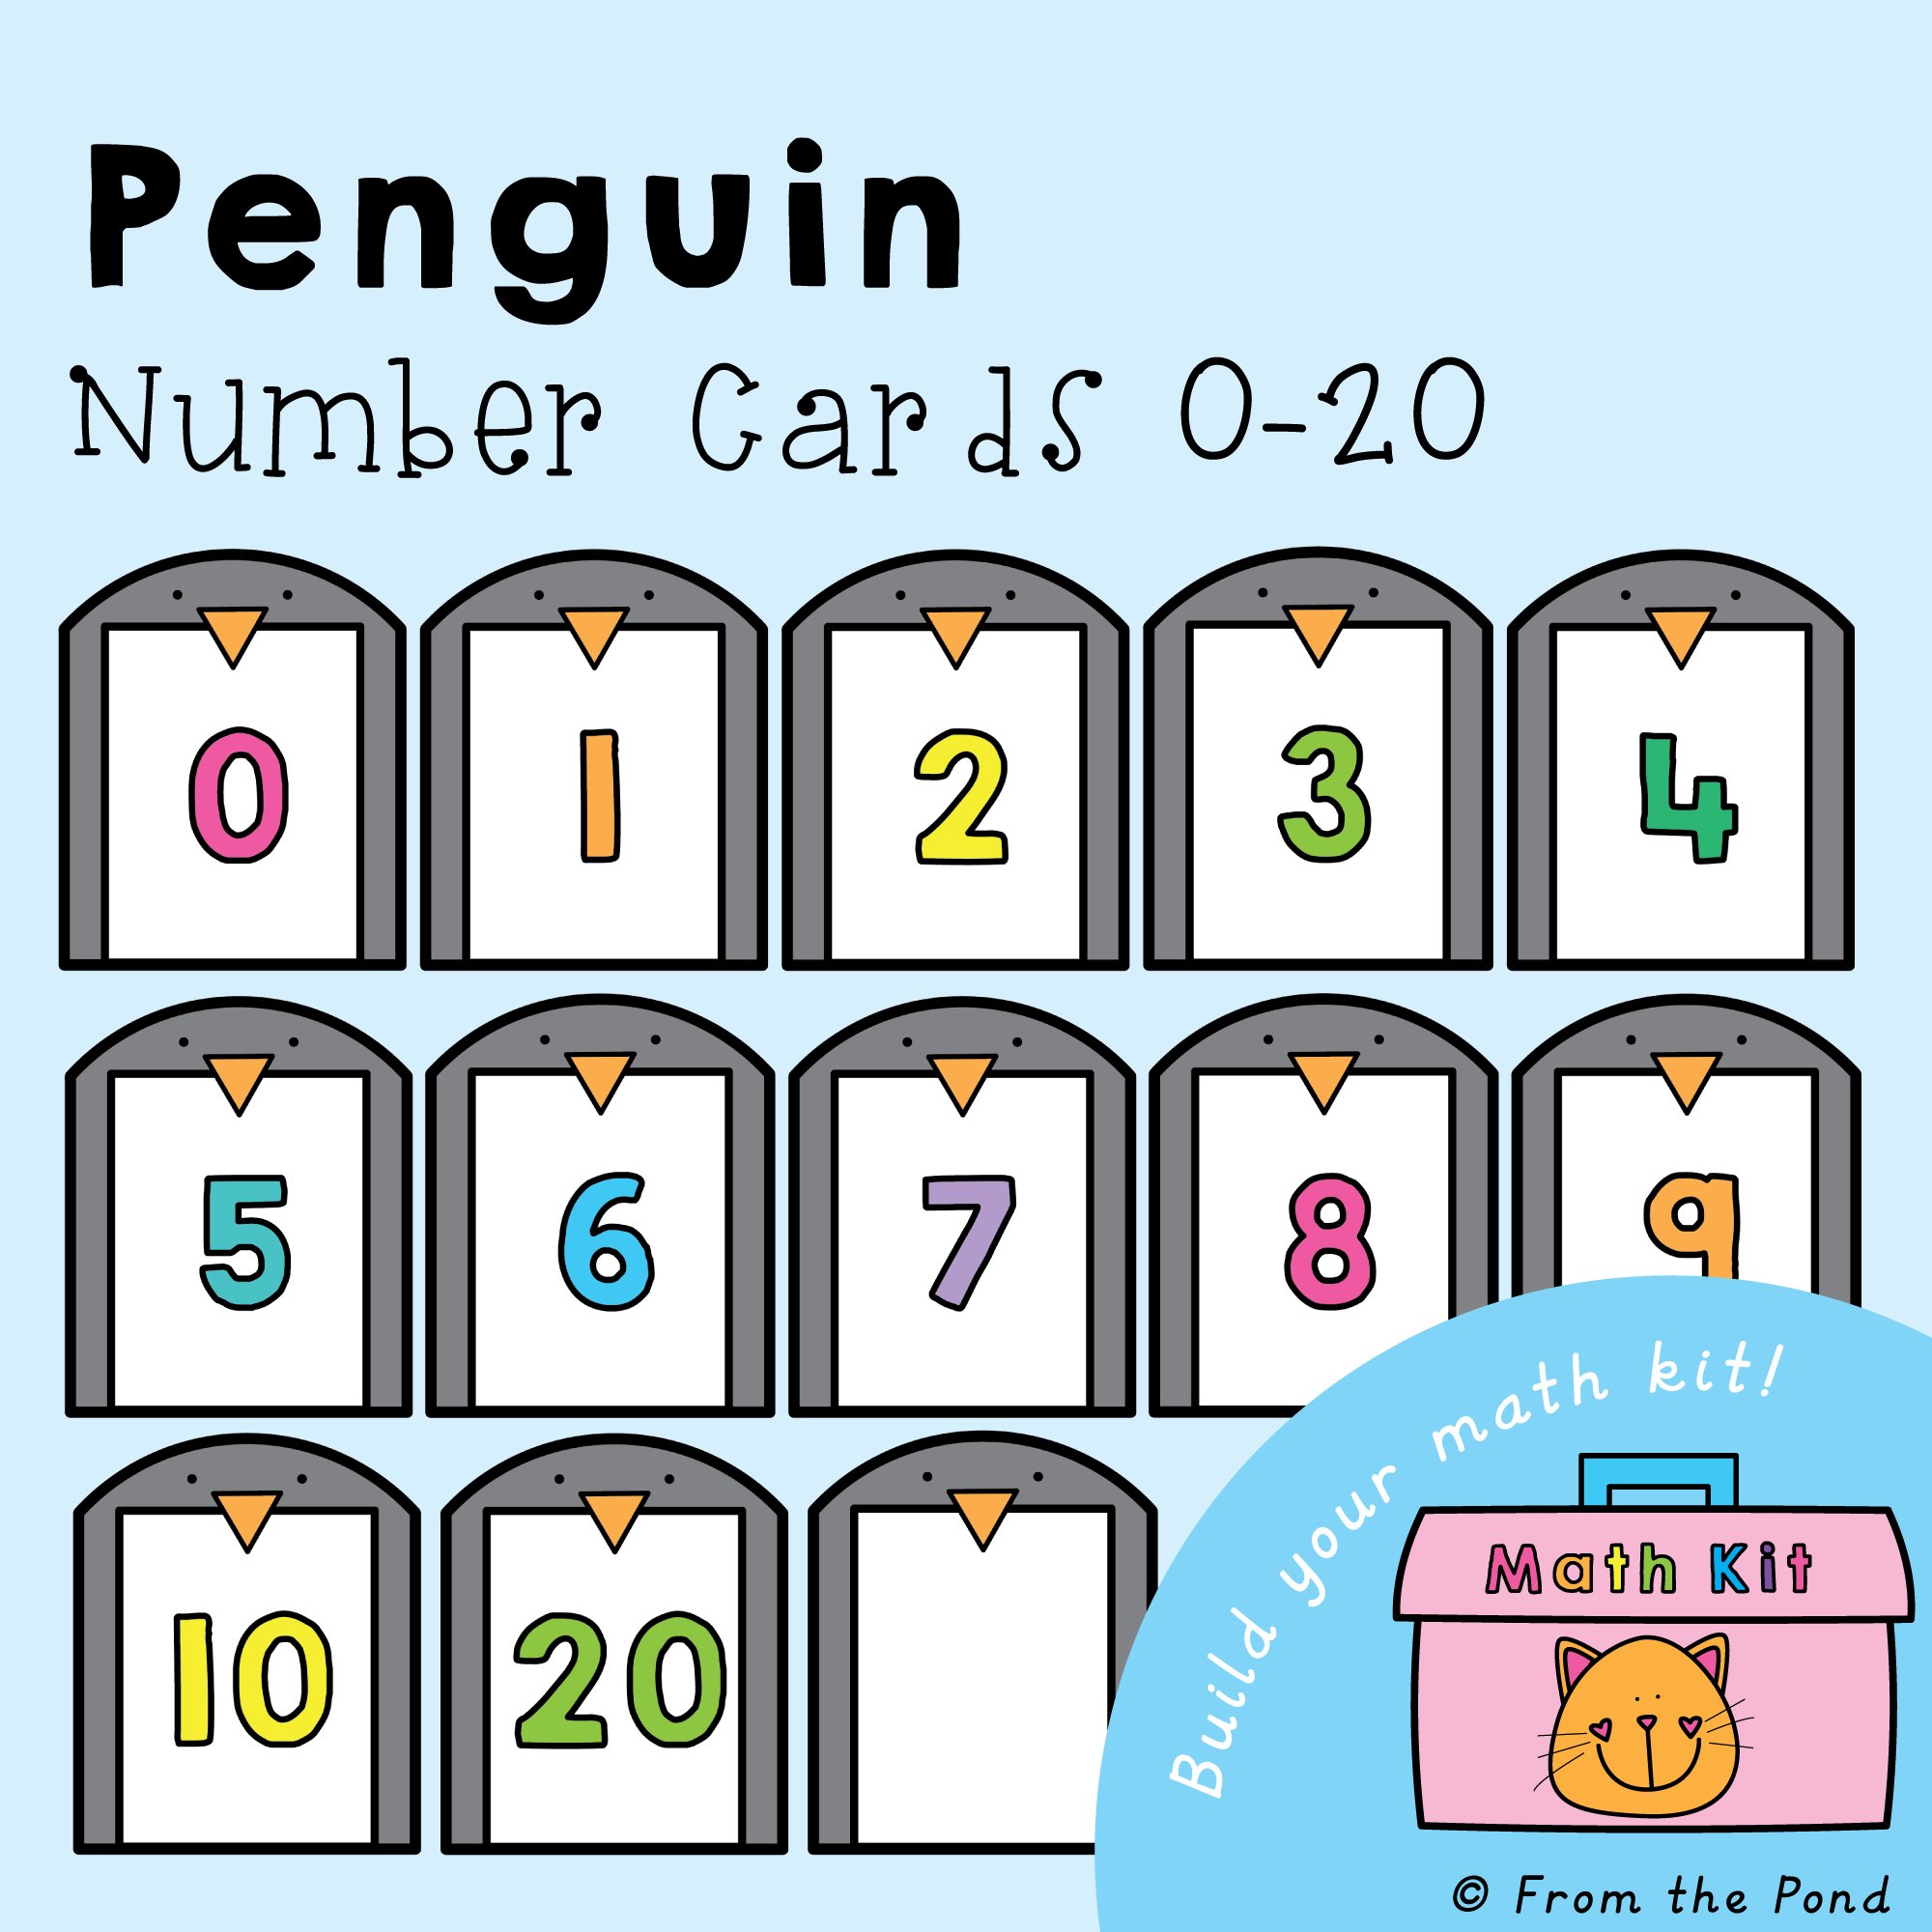 penguin-number-cards-pic-01.jpg